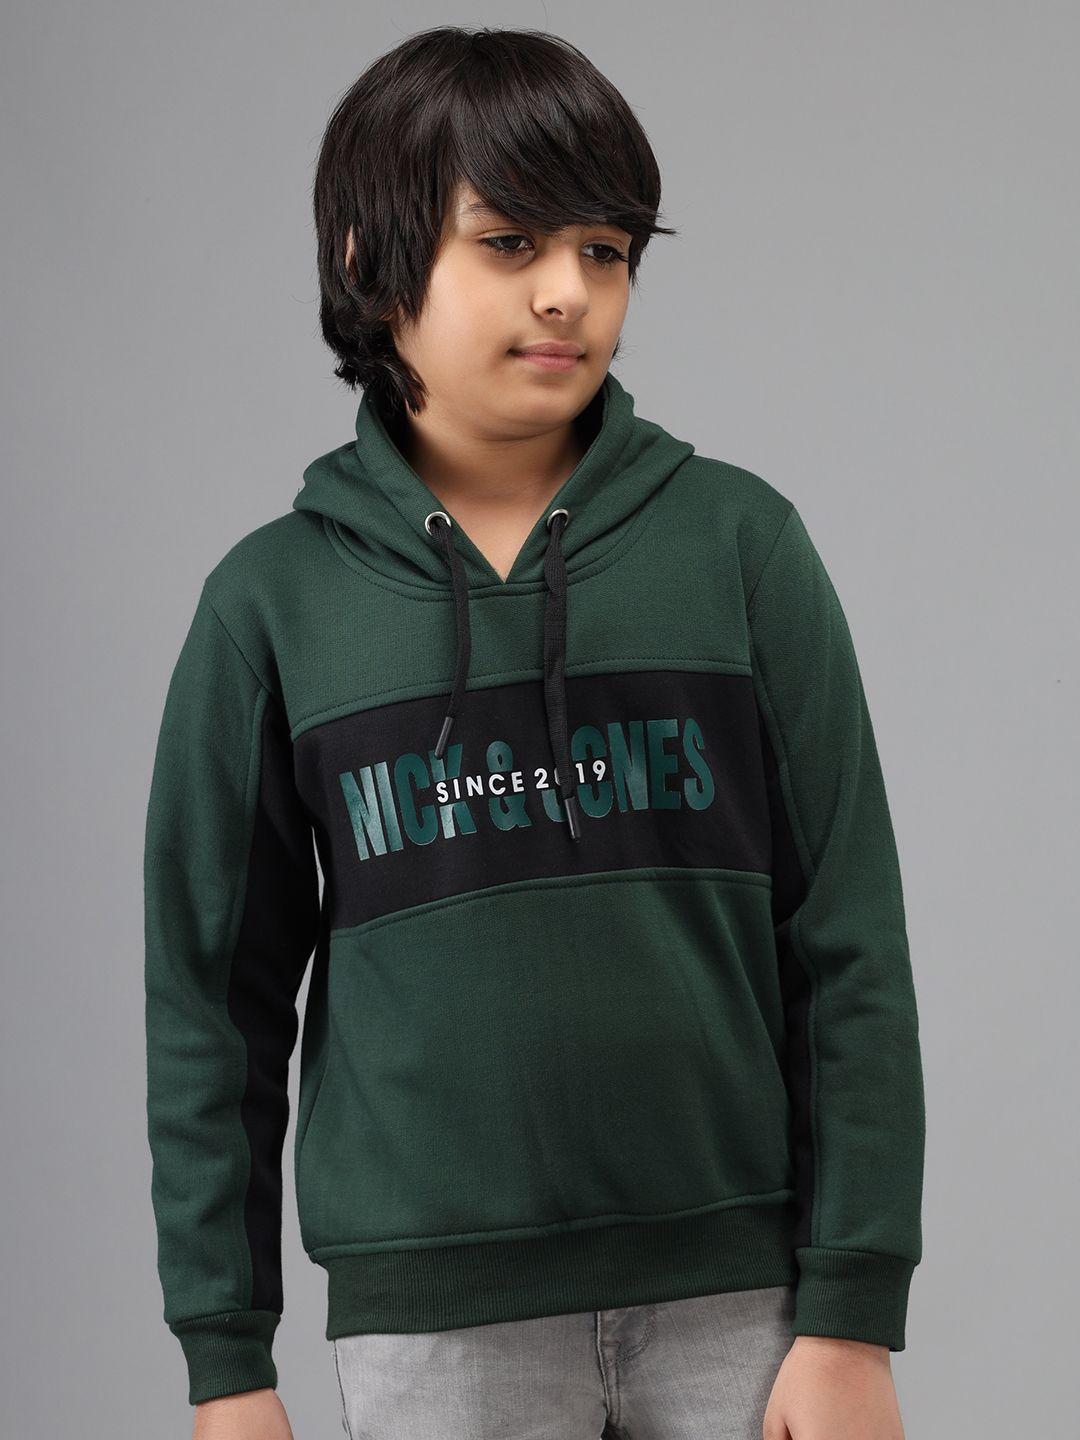 nick and jones boys green & black brand logo print hooded cotton sweatshirt